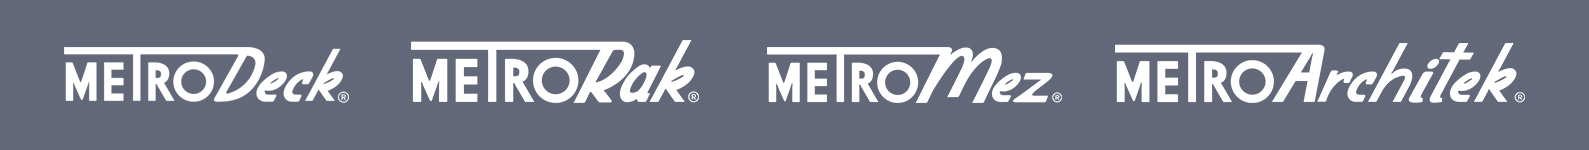 MetroDeck, MetroRak, MetroMez, MetroArchitek